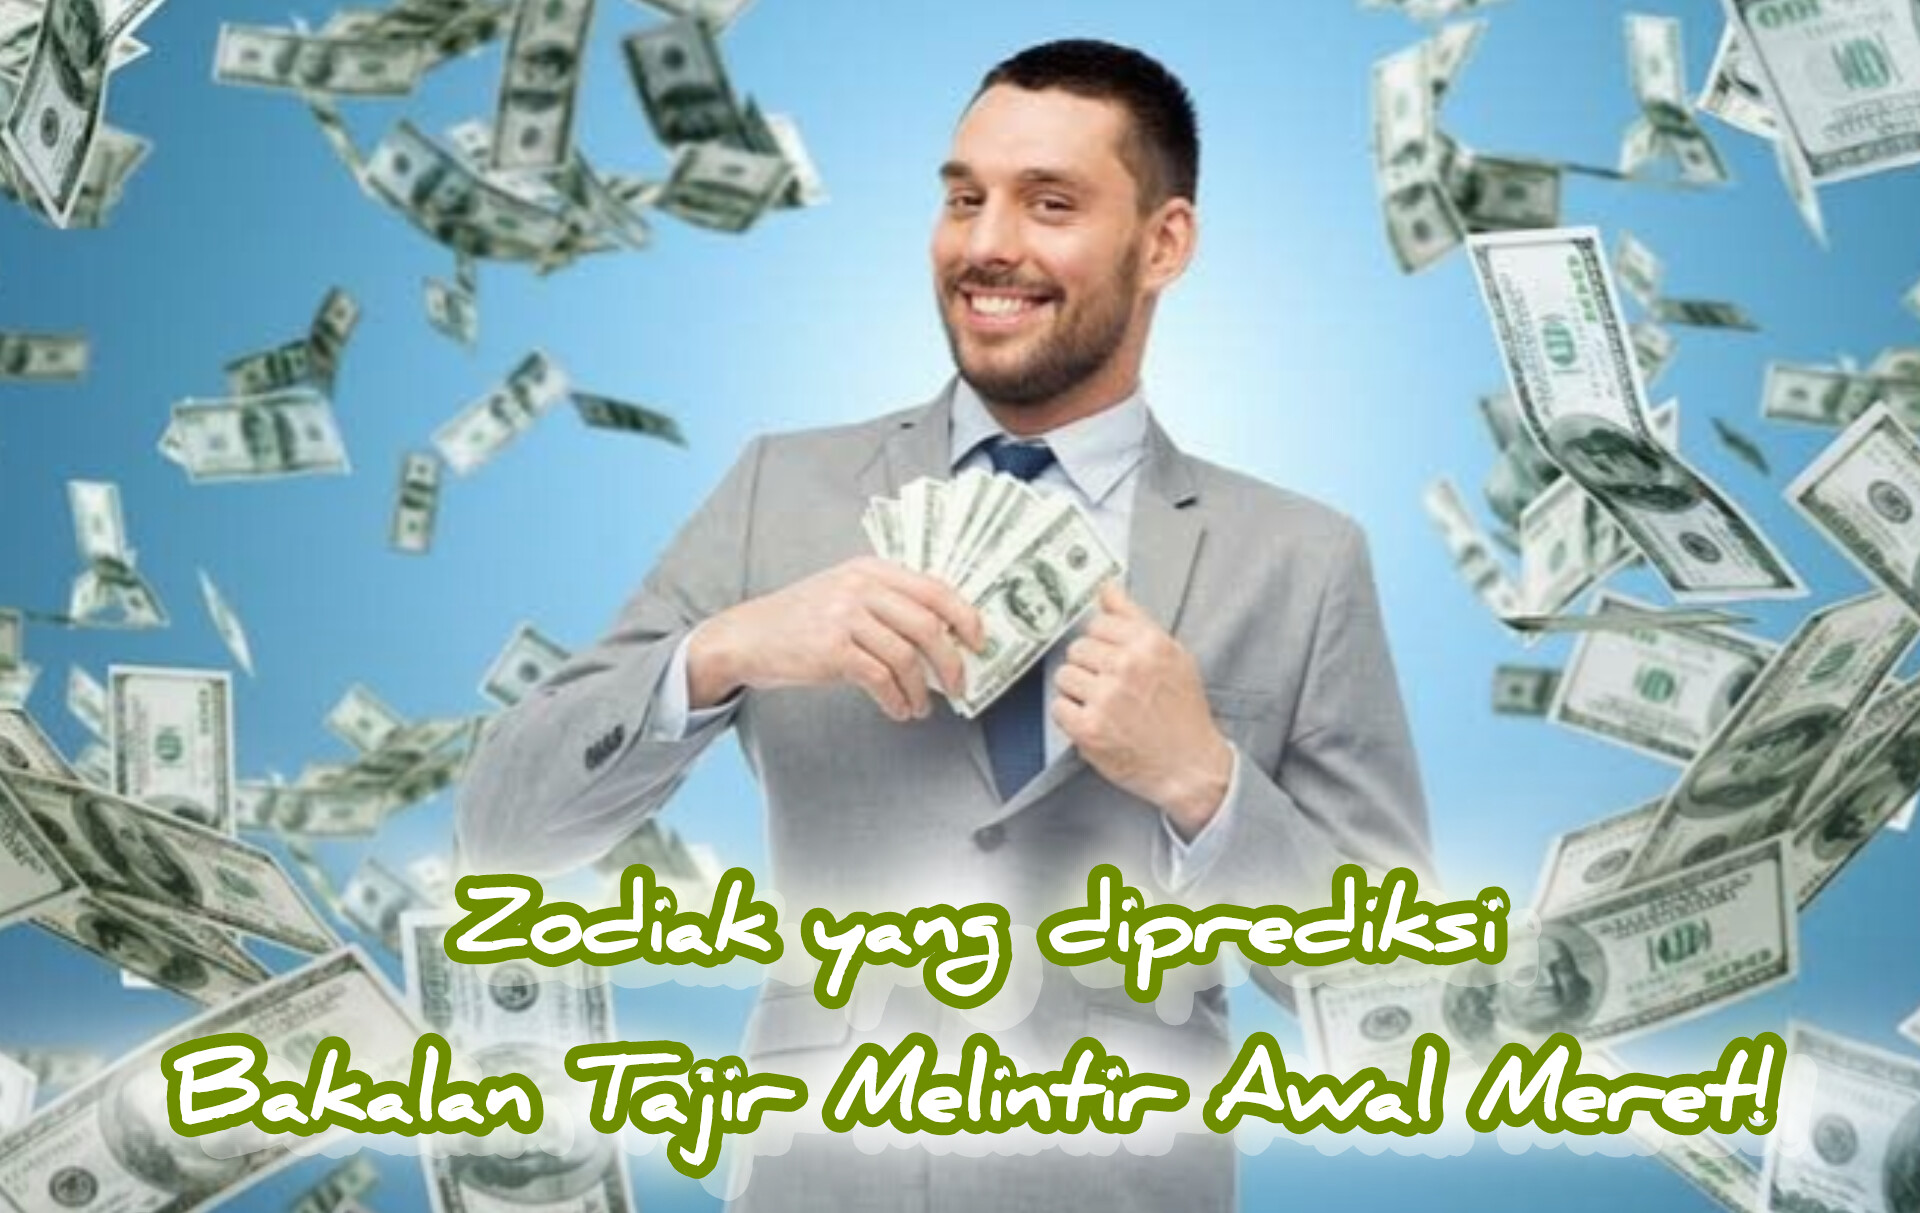 Deretan Zodiak yang Diprediksi Bakalan Tajir Melintir di Awal Maret, Siap-siap Kaya Mendadak!